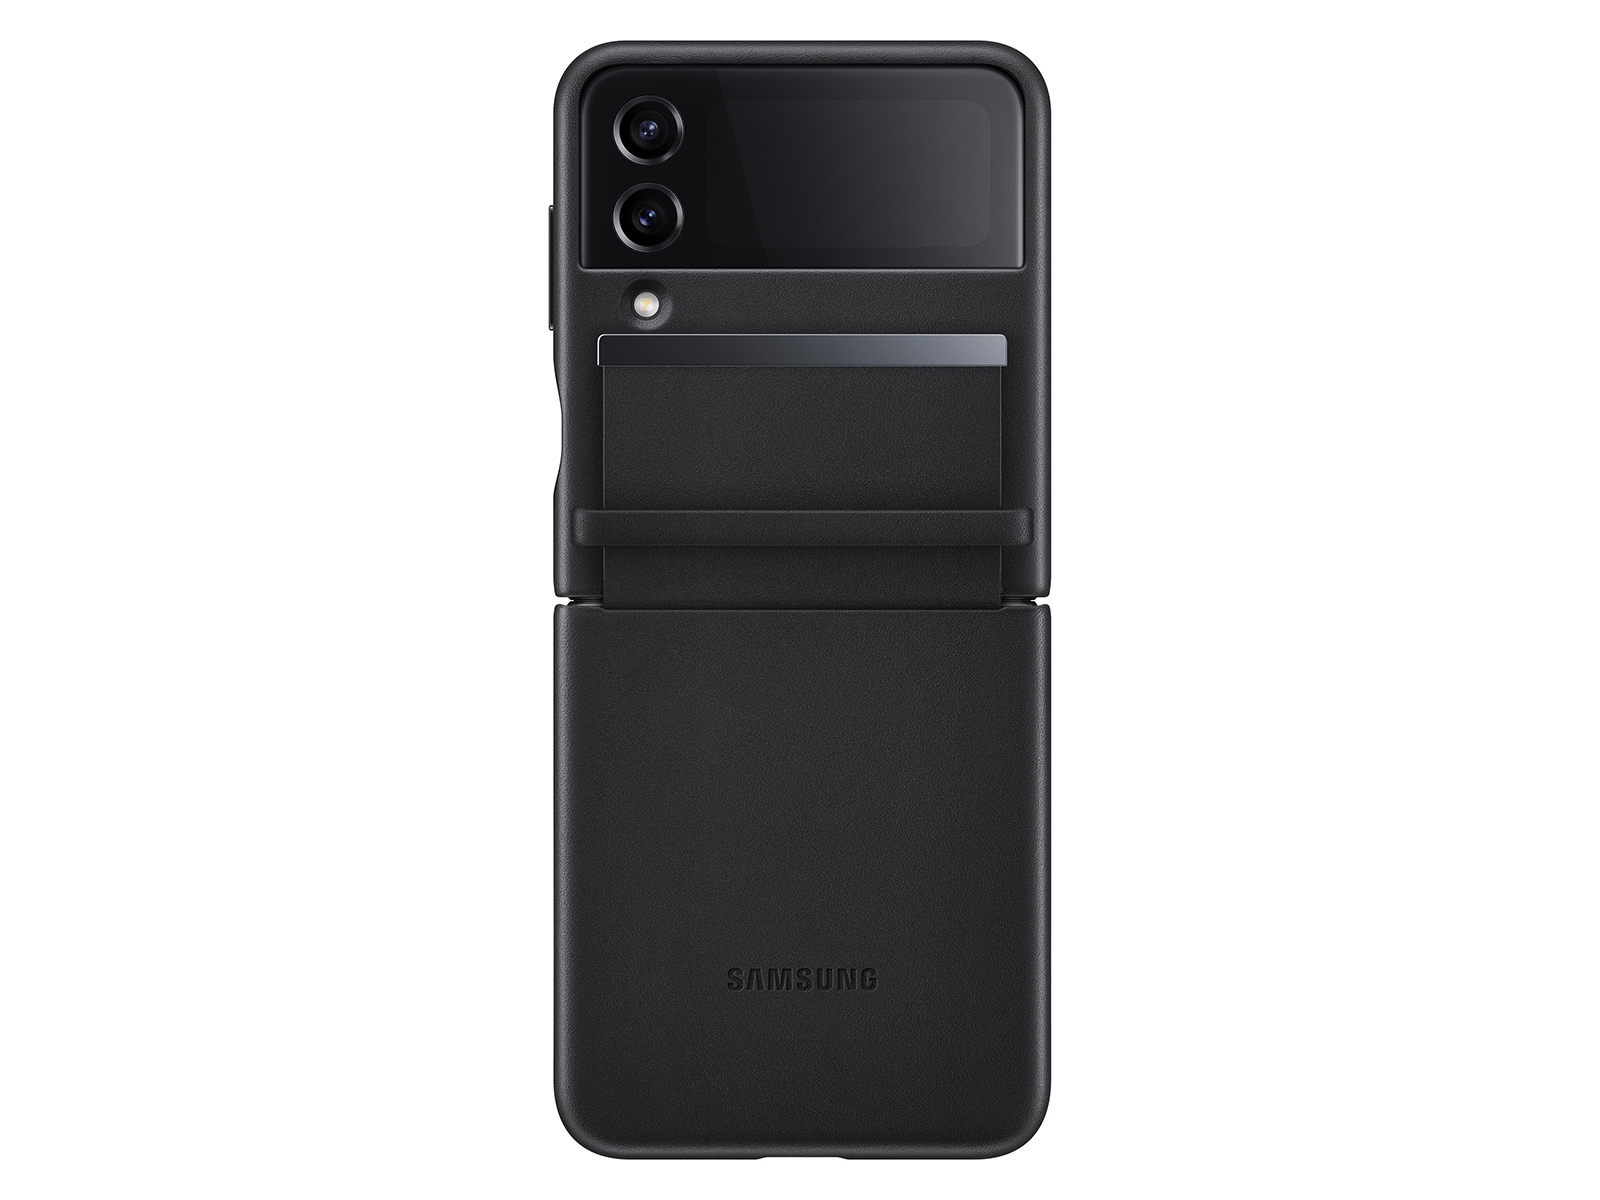  SHIEID Leather Case for Samsung Galaxy Z Flip 4 with a